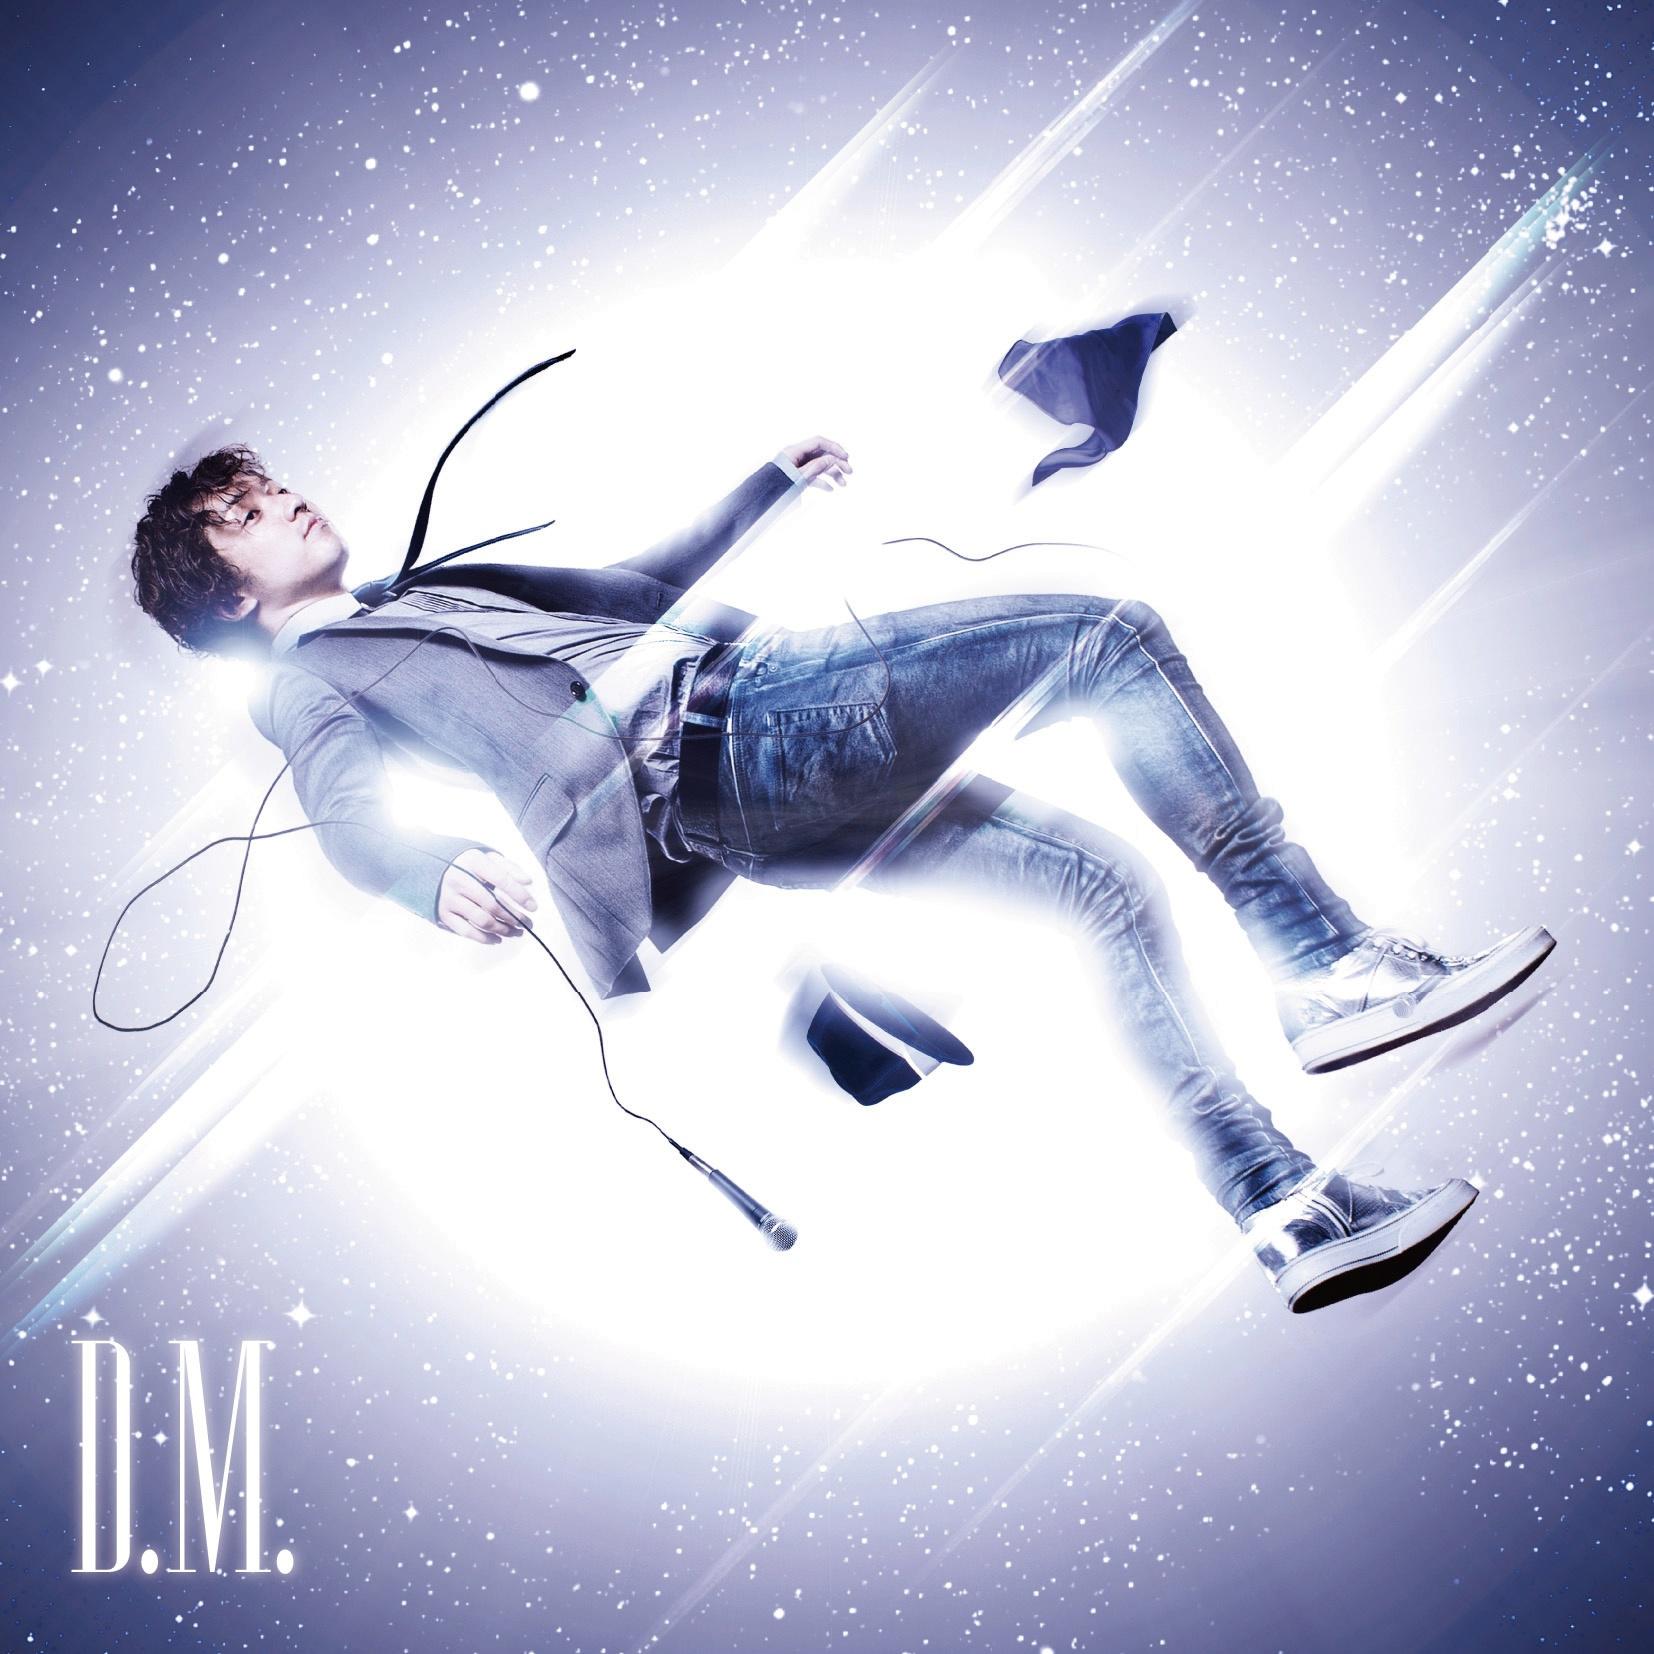 Illusion Show歌词 歌手三浦大知-专辑D.M.-单曲《Illusion Show》LRC歌词下载